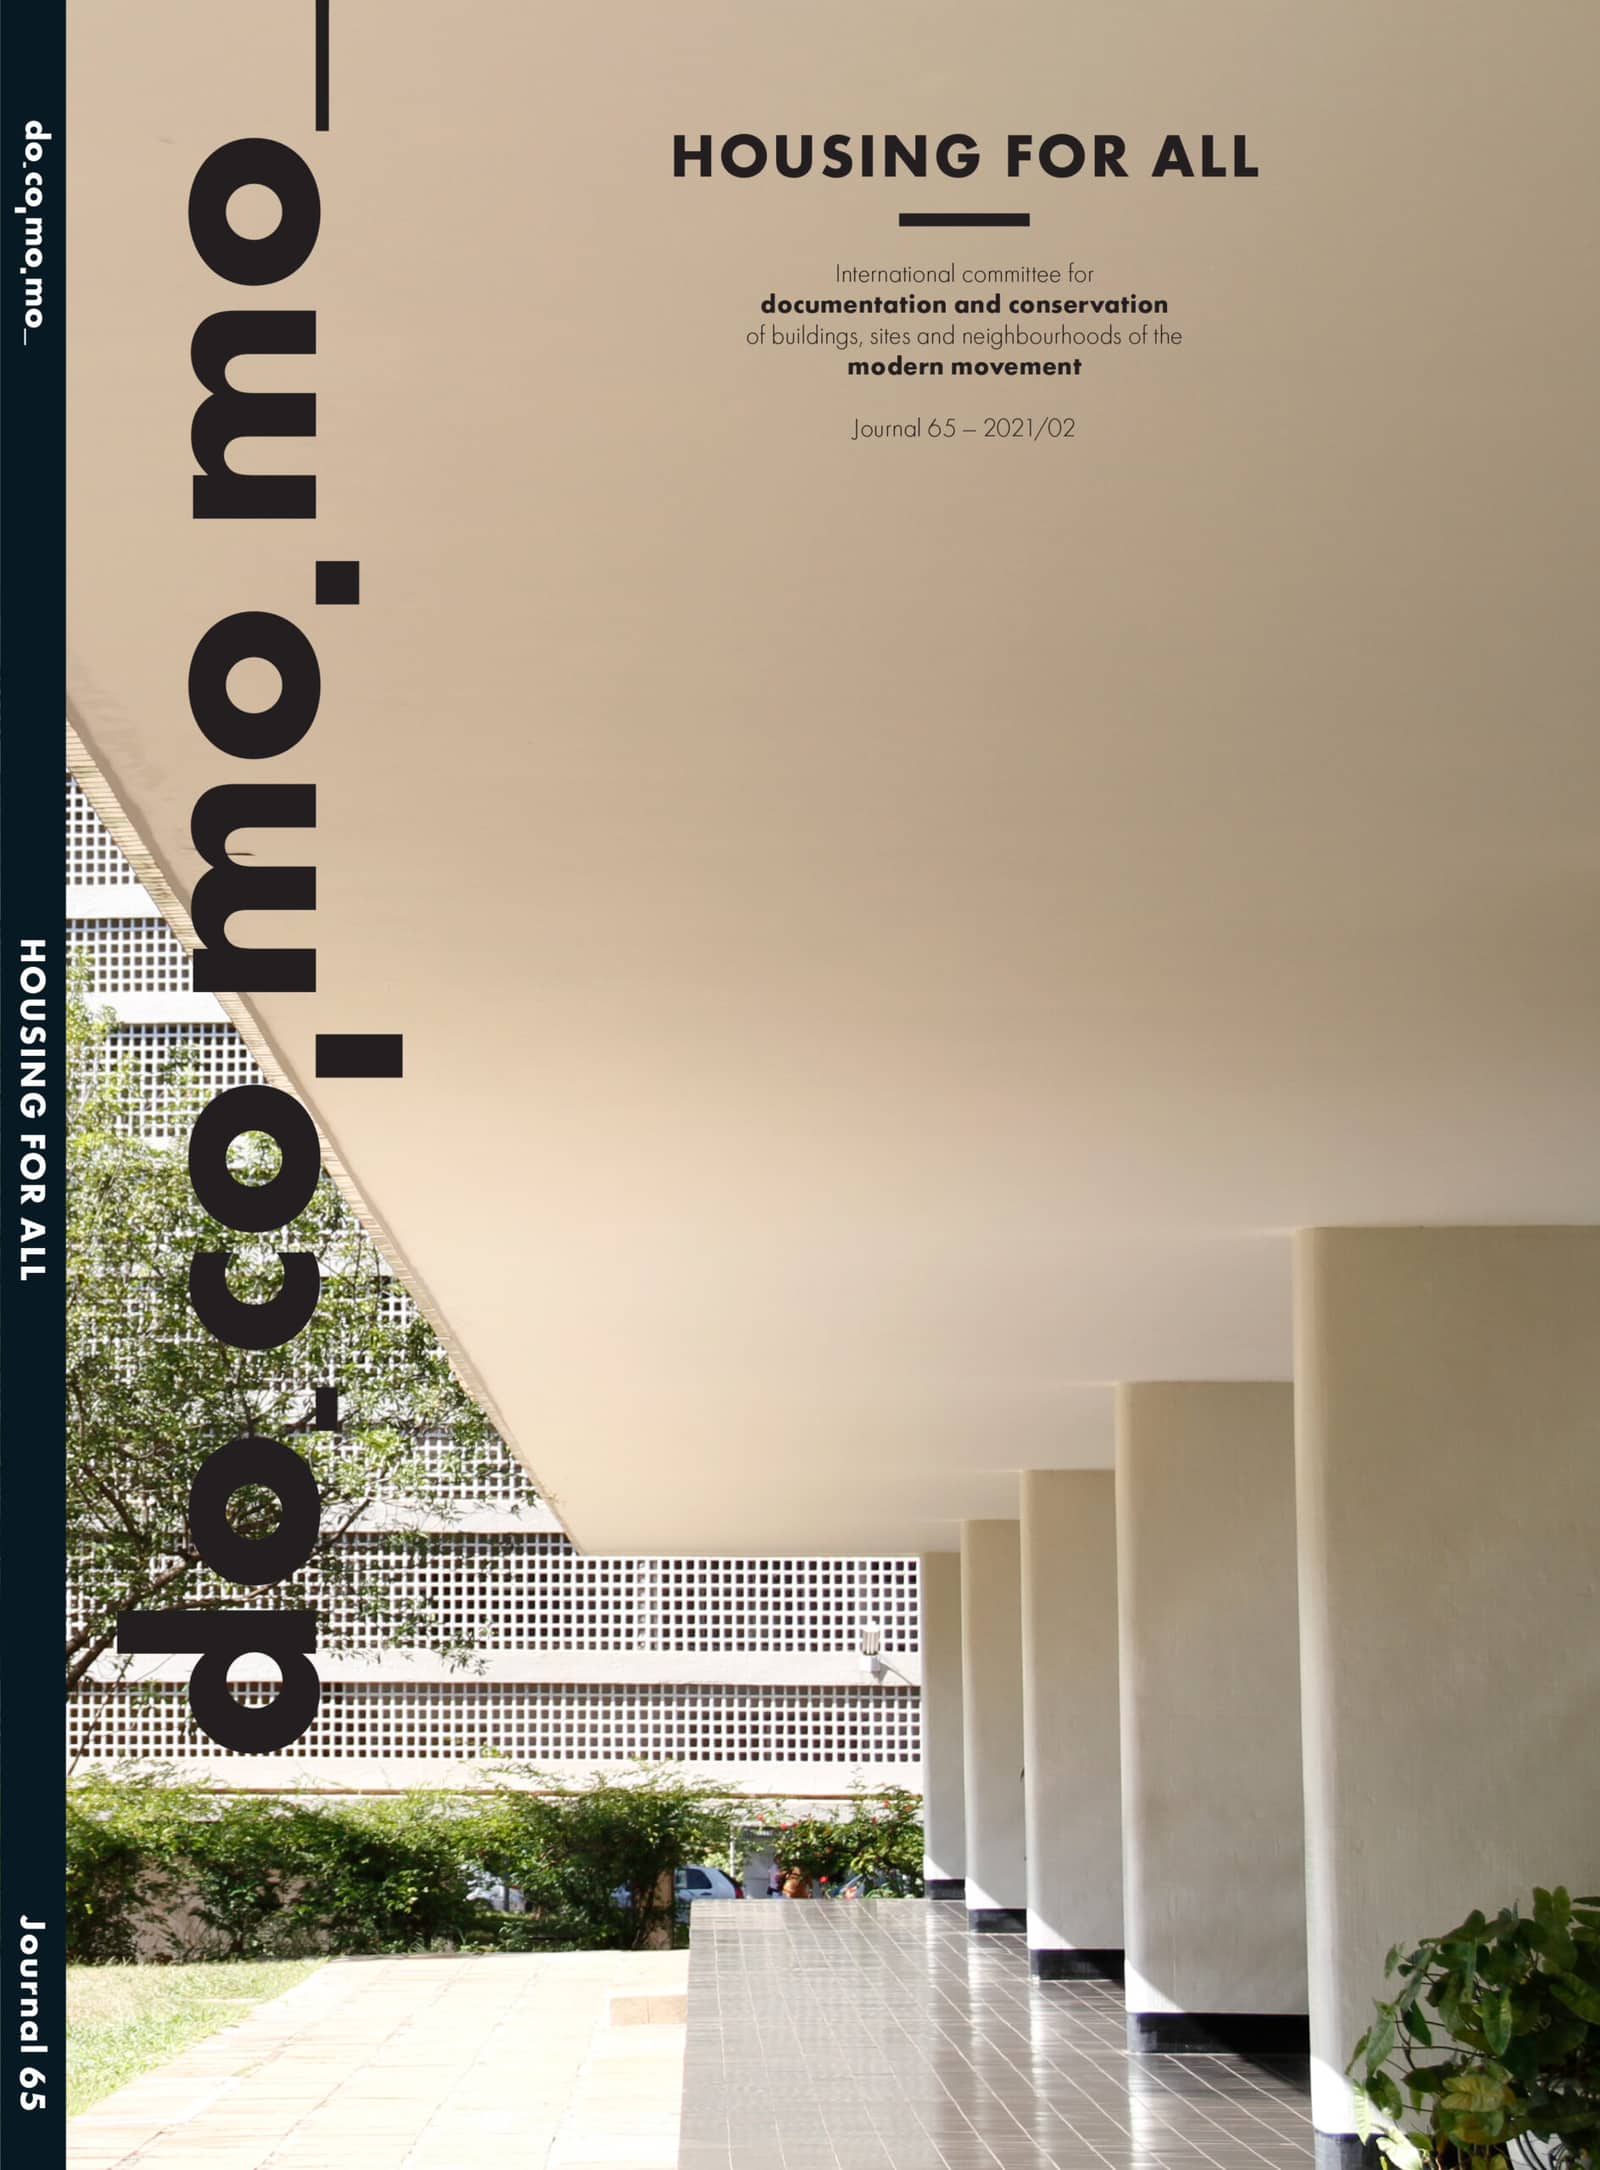 Docomomo Journal Cover: Housing for All